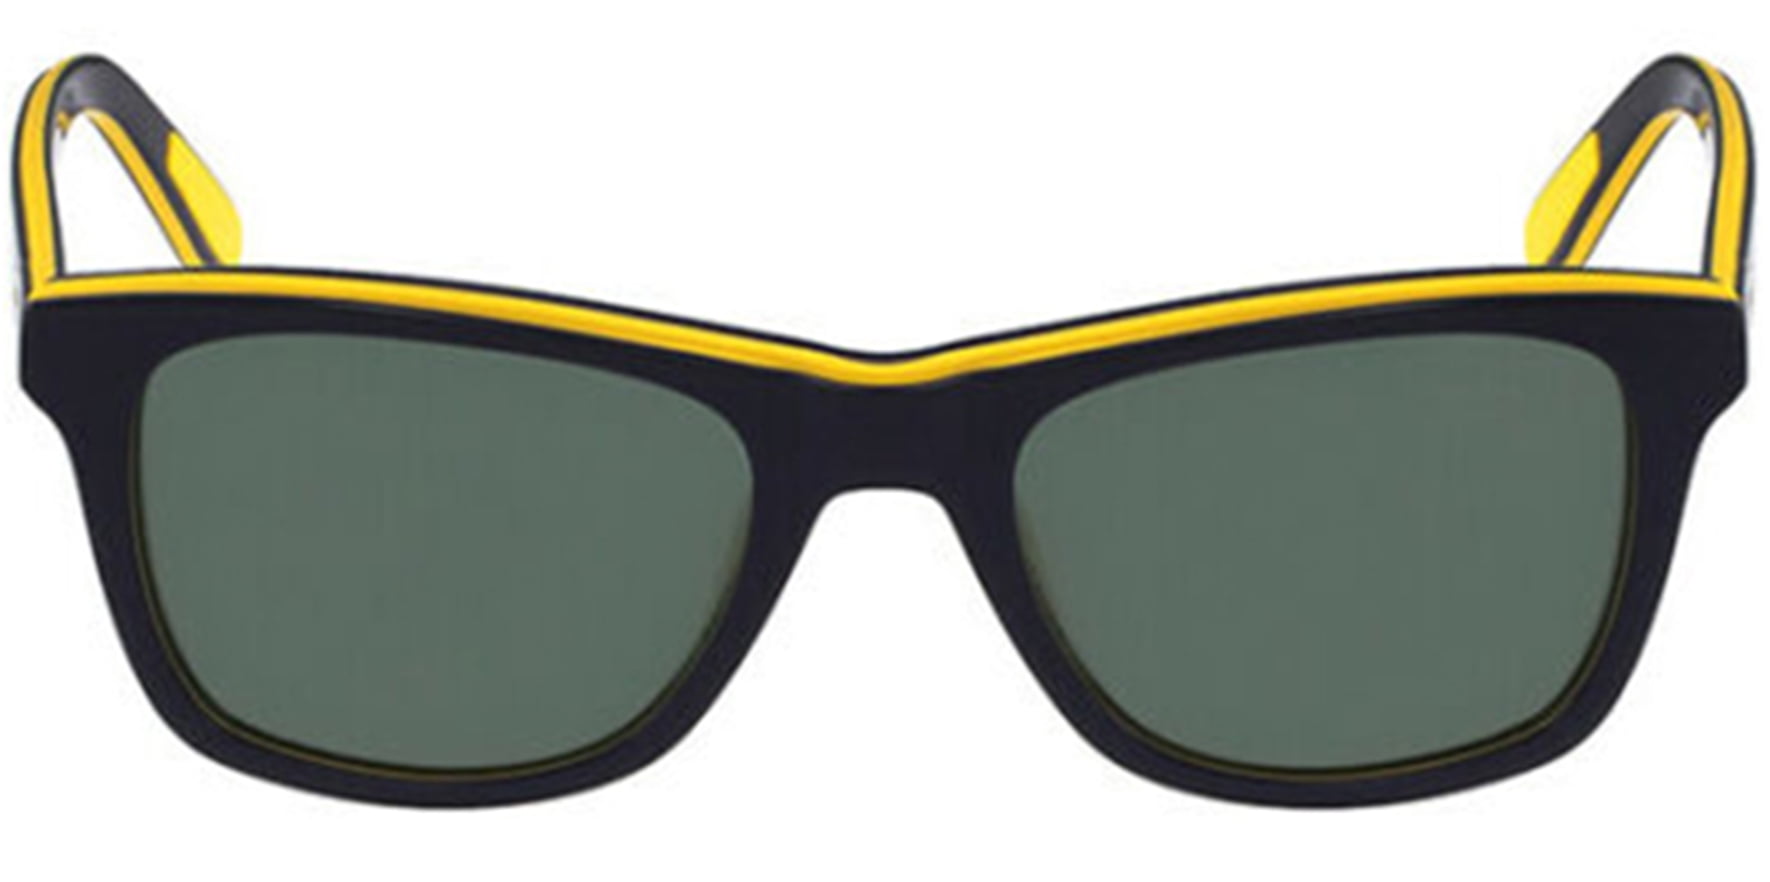 Lacoste L781SP 414 Unisex Full Blue/Yellow Frame Sunglasses - Walmart.com